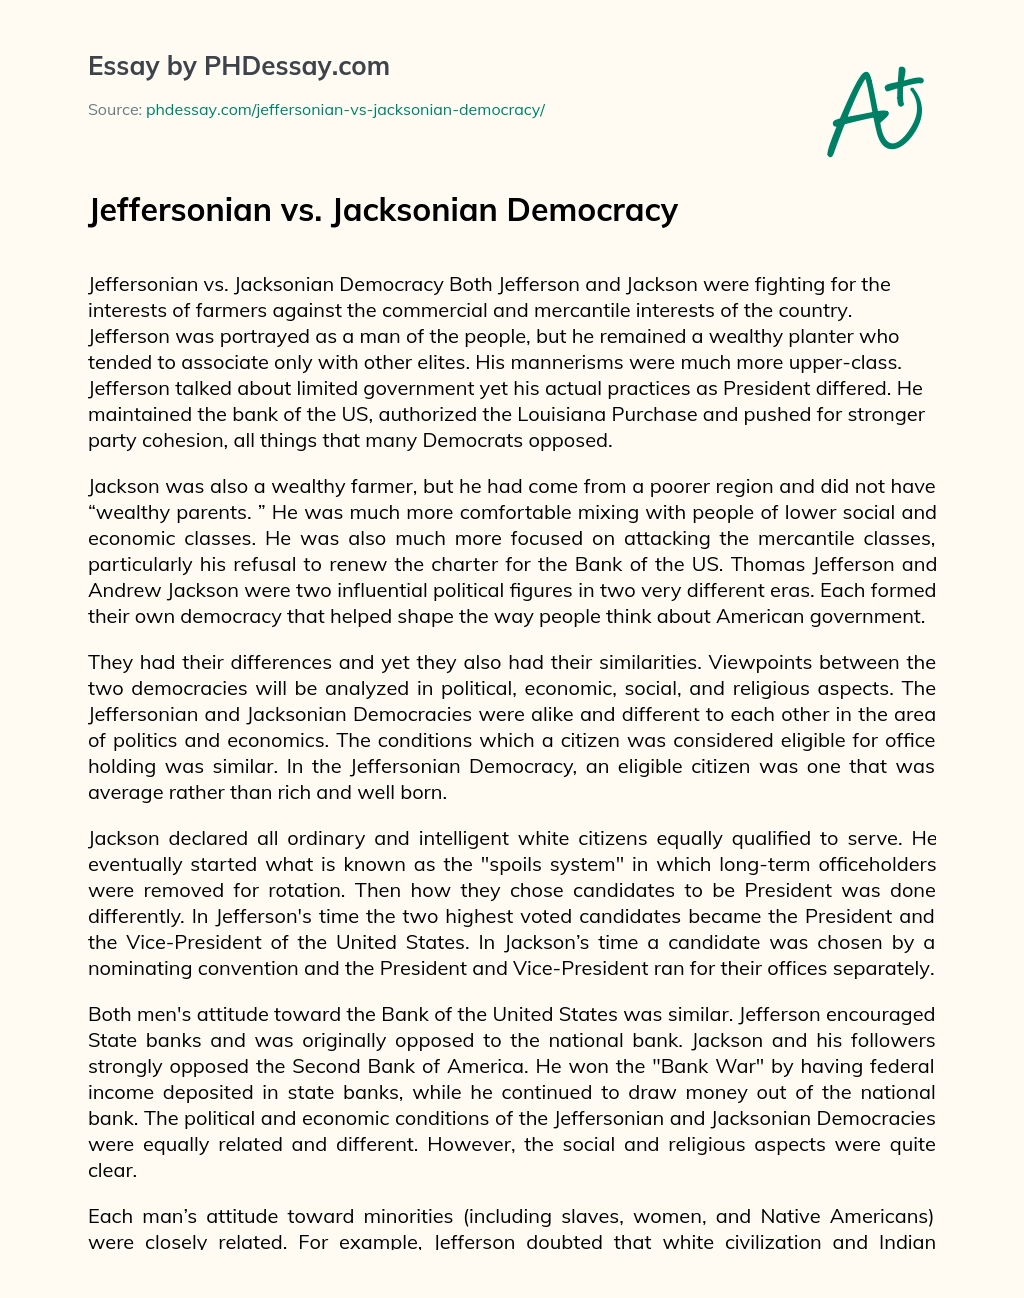 Jeffersonian vs. Jacksonian Democracy essay